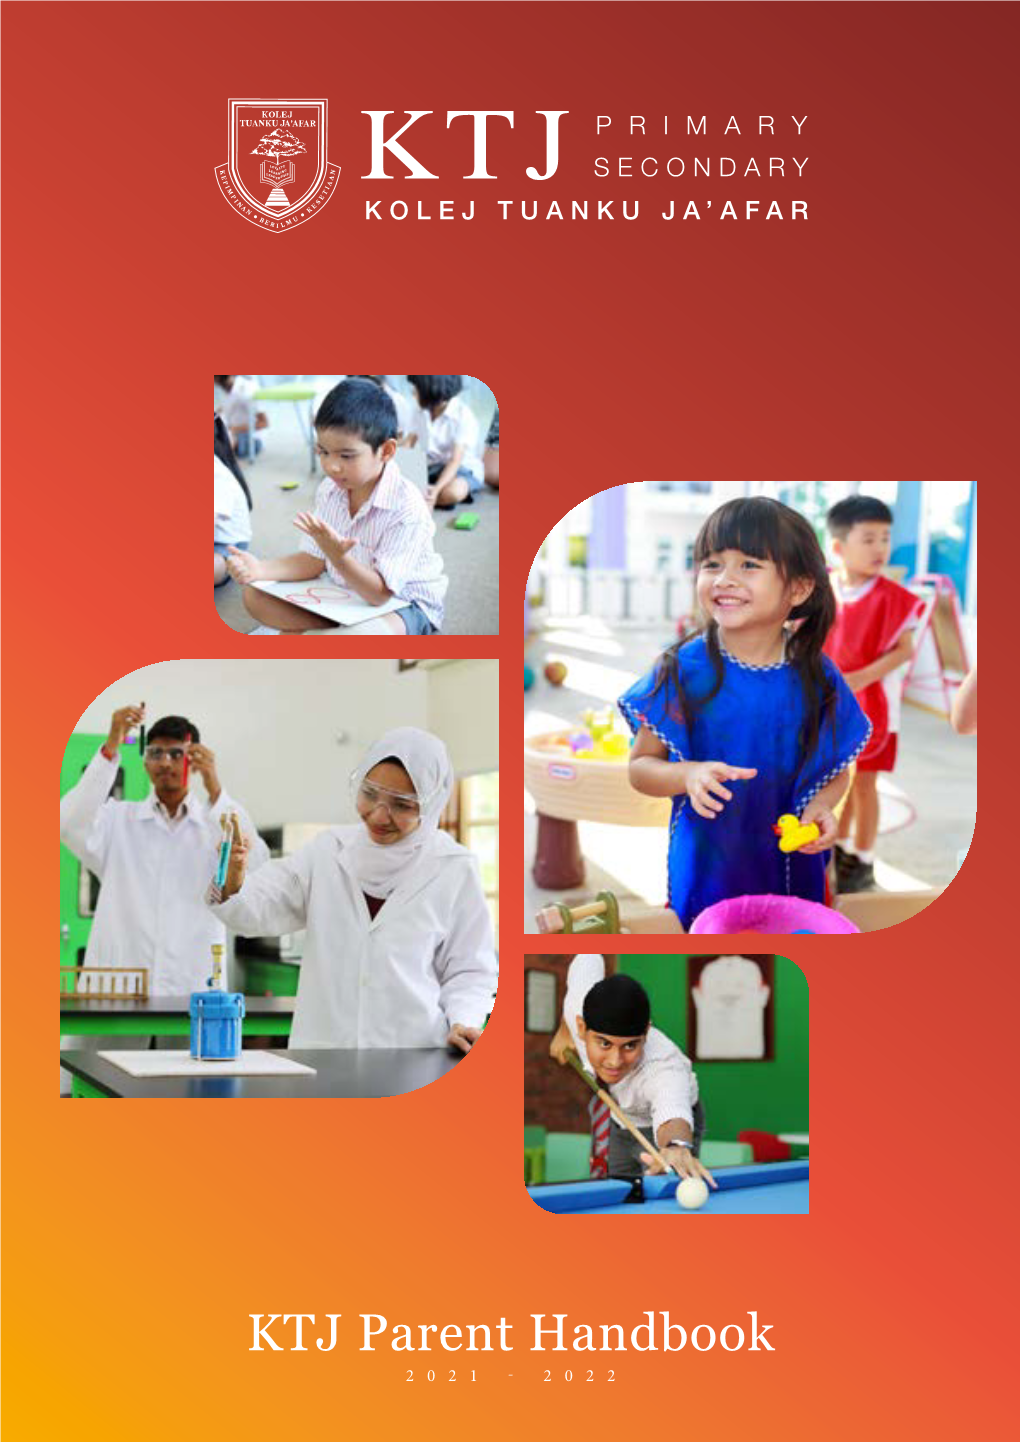 KTJ Parent Handbook 2021 - 2022 Contents